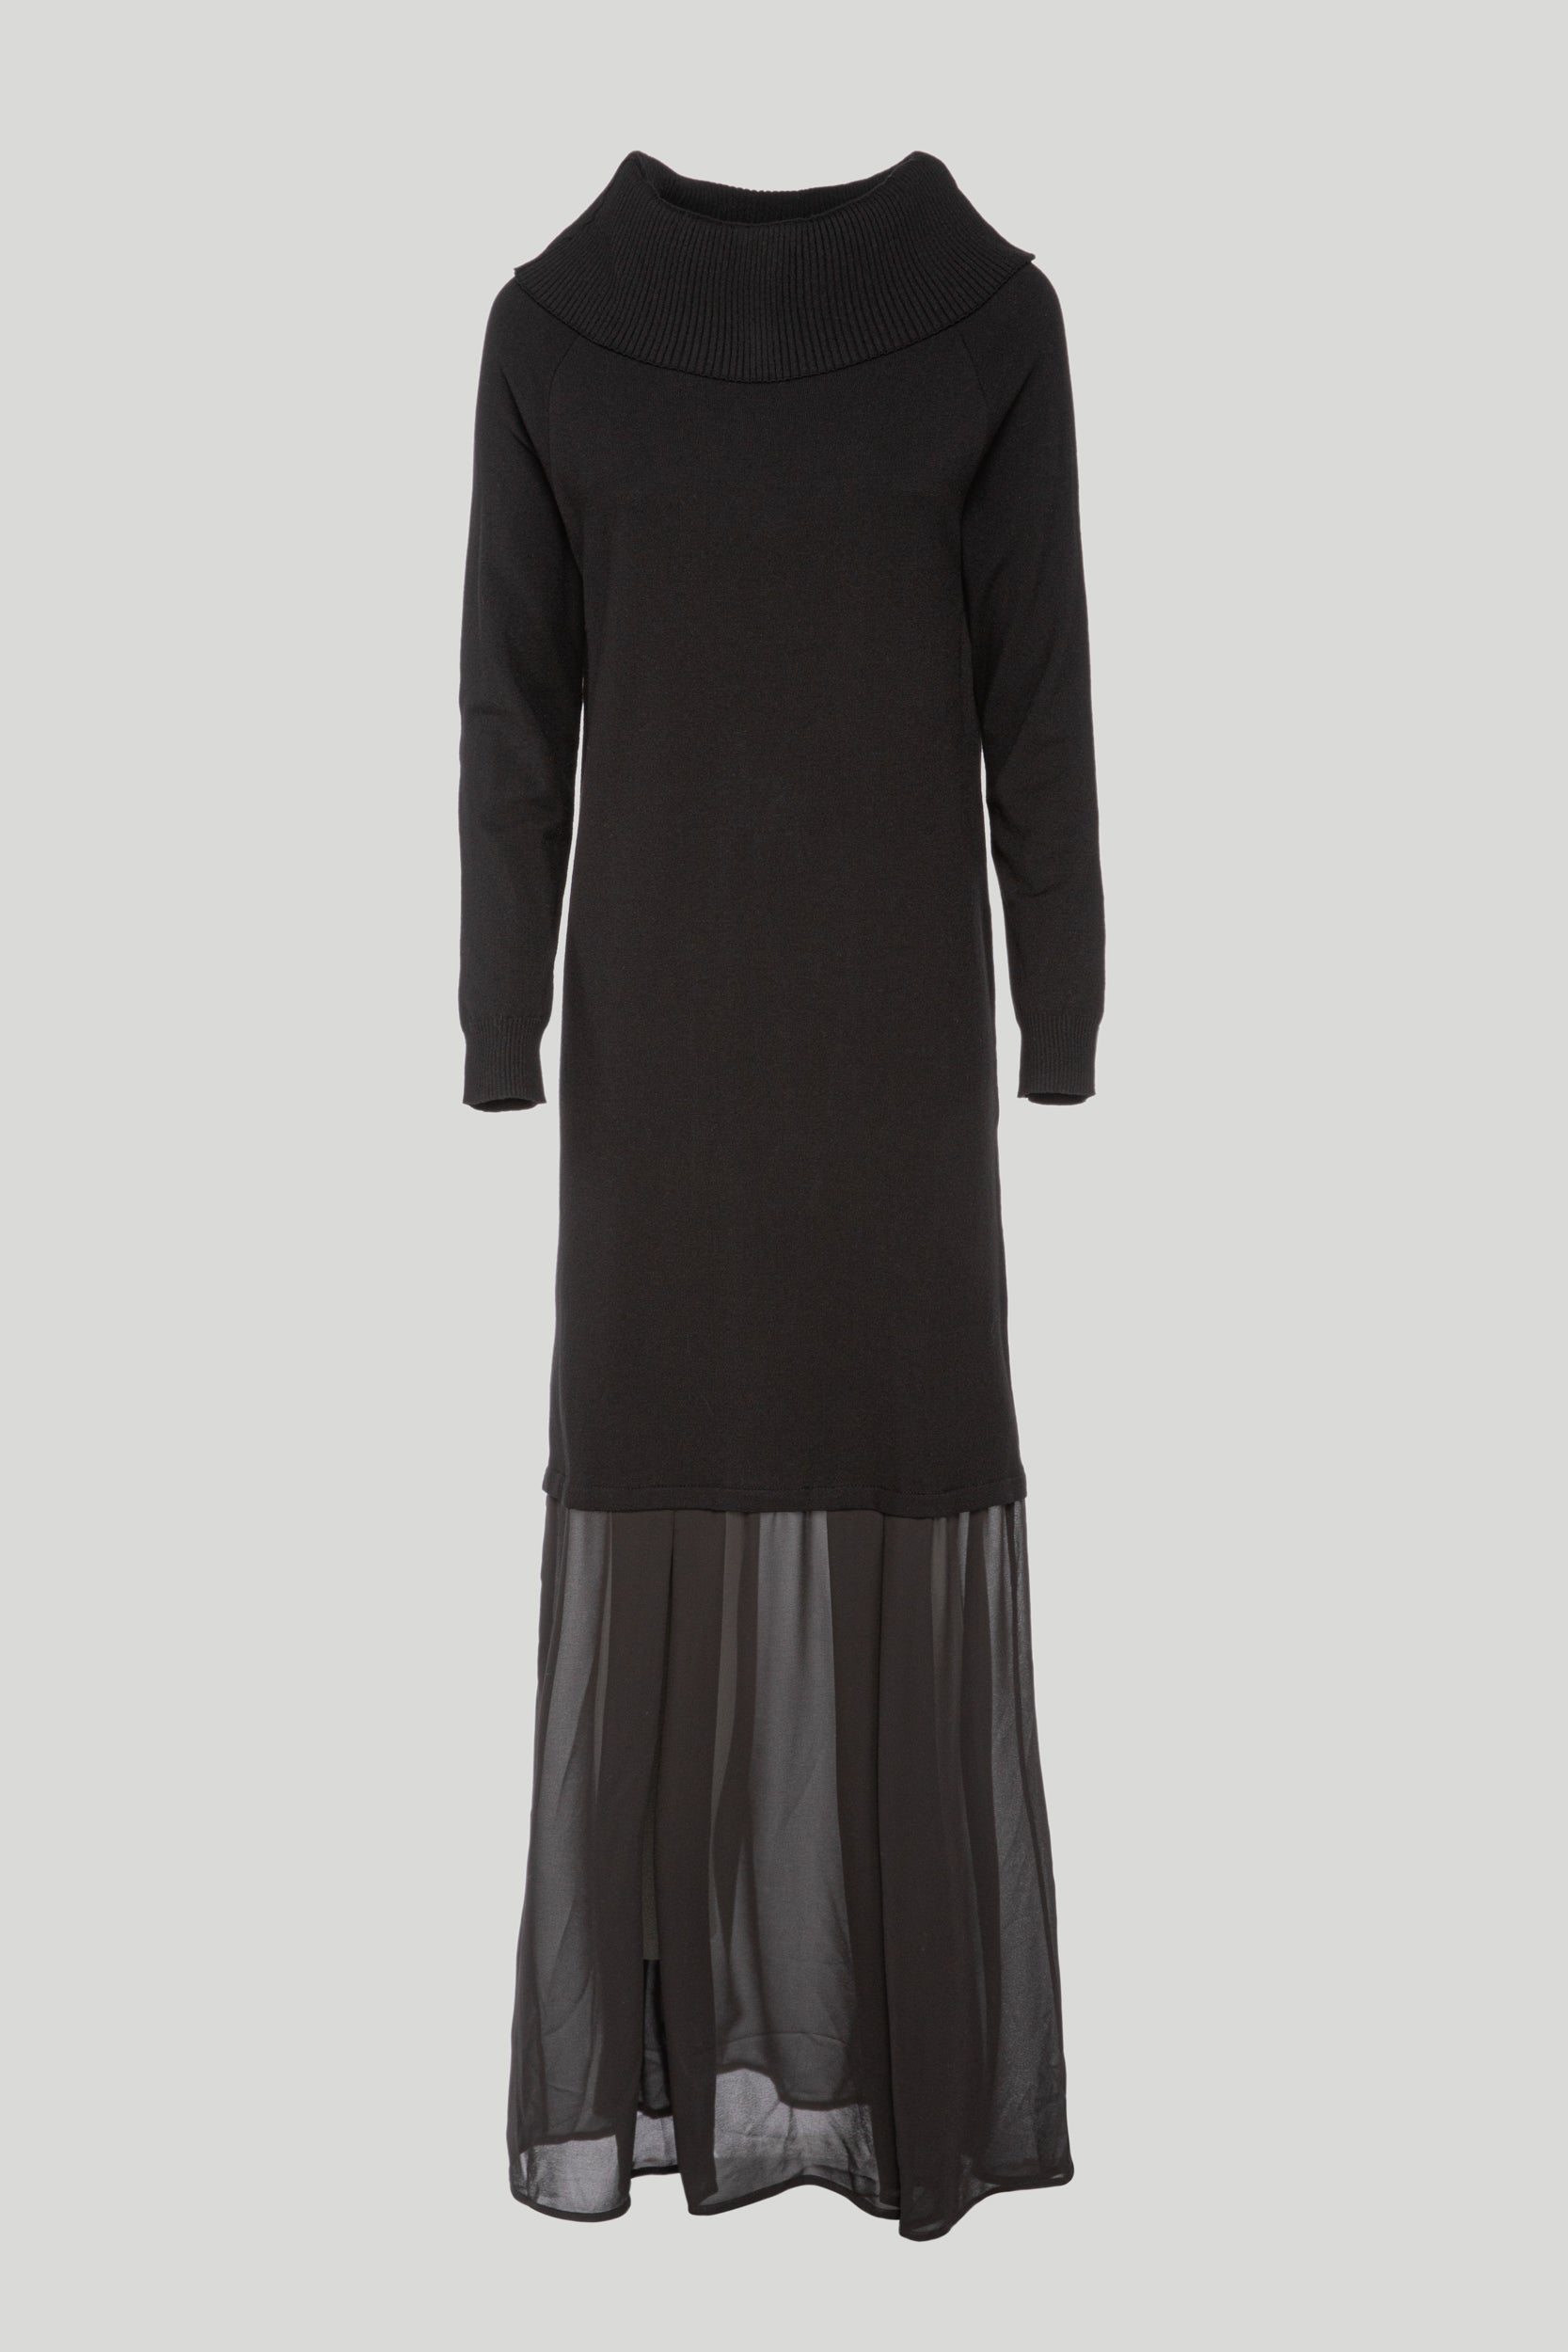 LIU-JO Knitted Dress